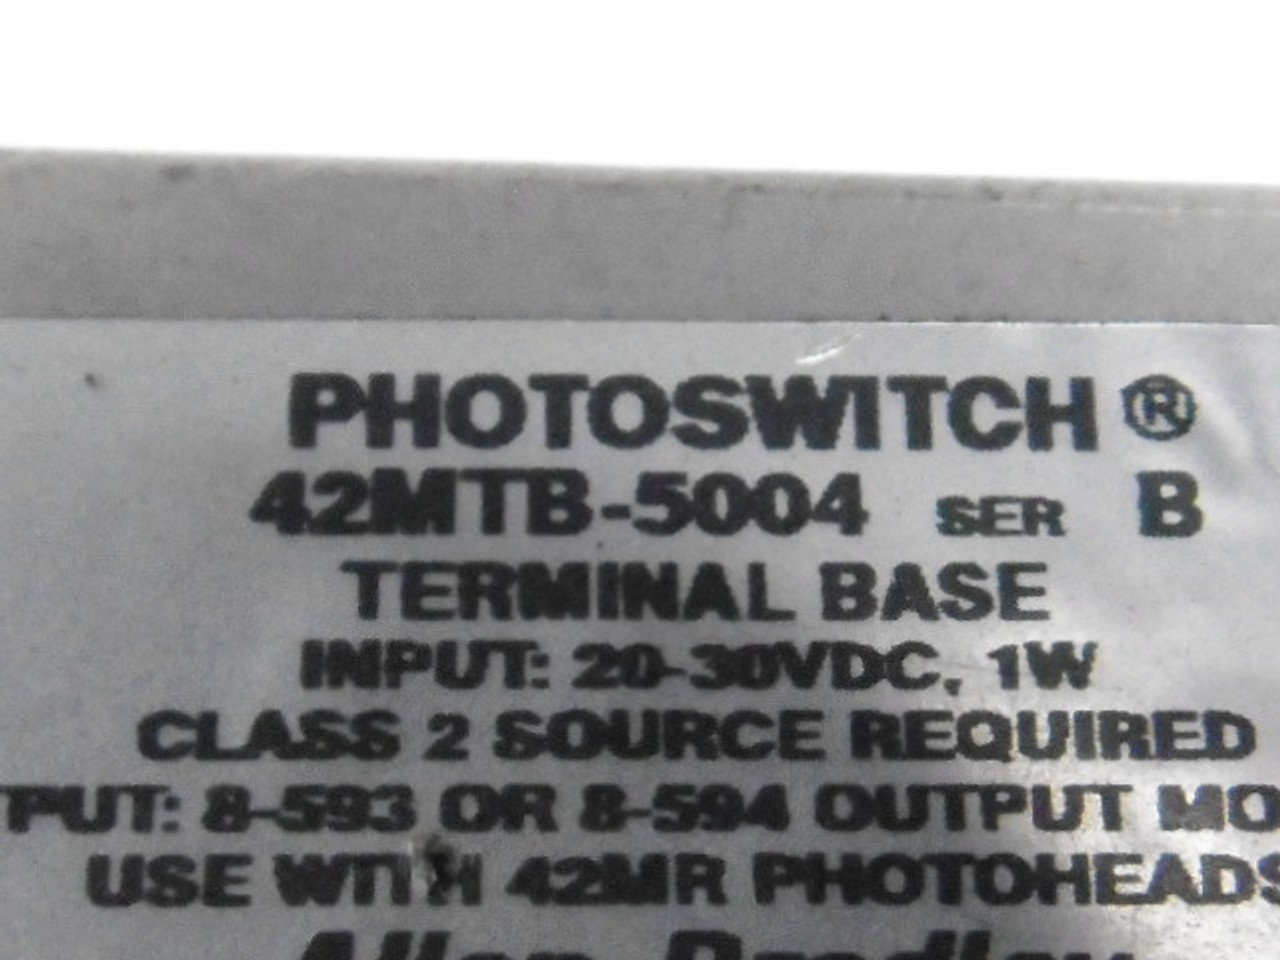 Allen-Bradley 42MTB-5004 Photoswitch Terminal Base 20-30VDC 1W COSMETIC DMG USED